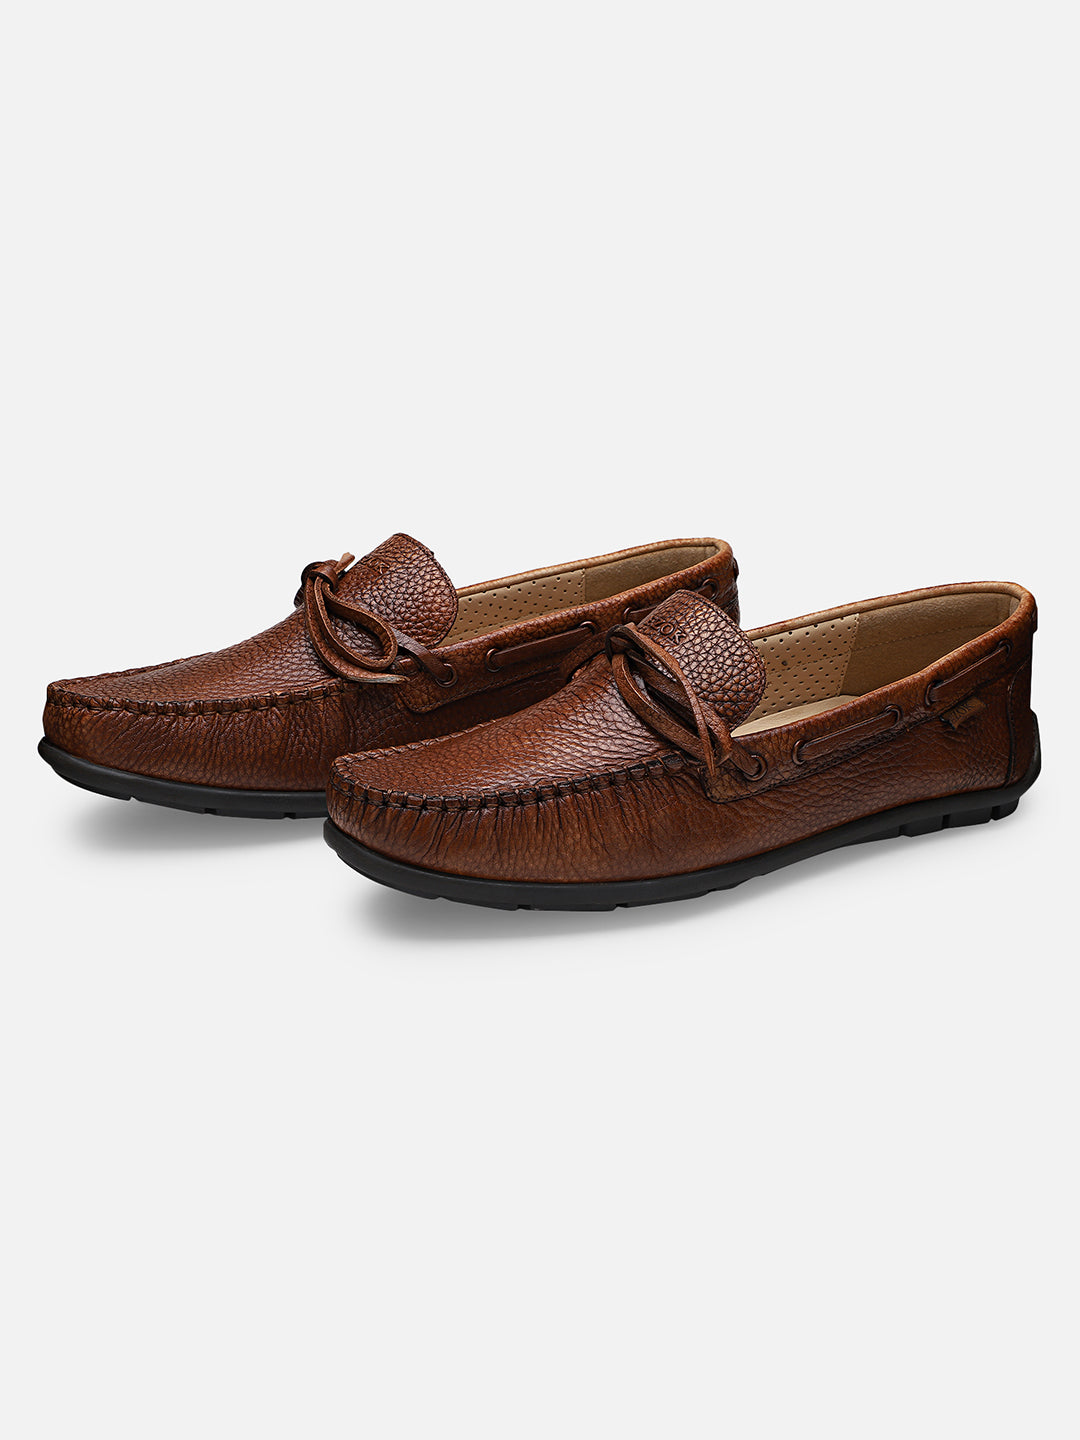 Ezok Men Moda 2060 Dark Tan Leather Moccasin Shoes